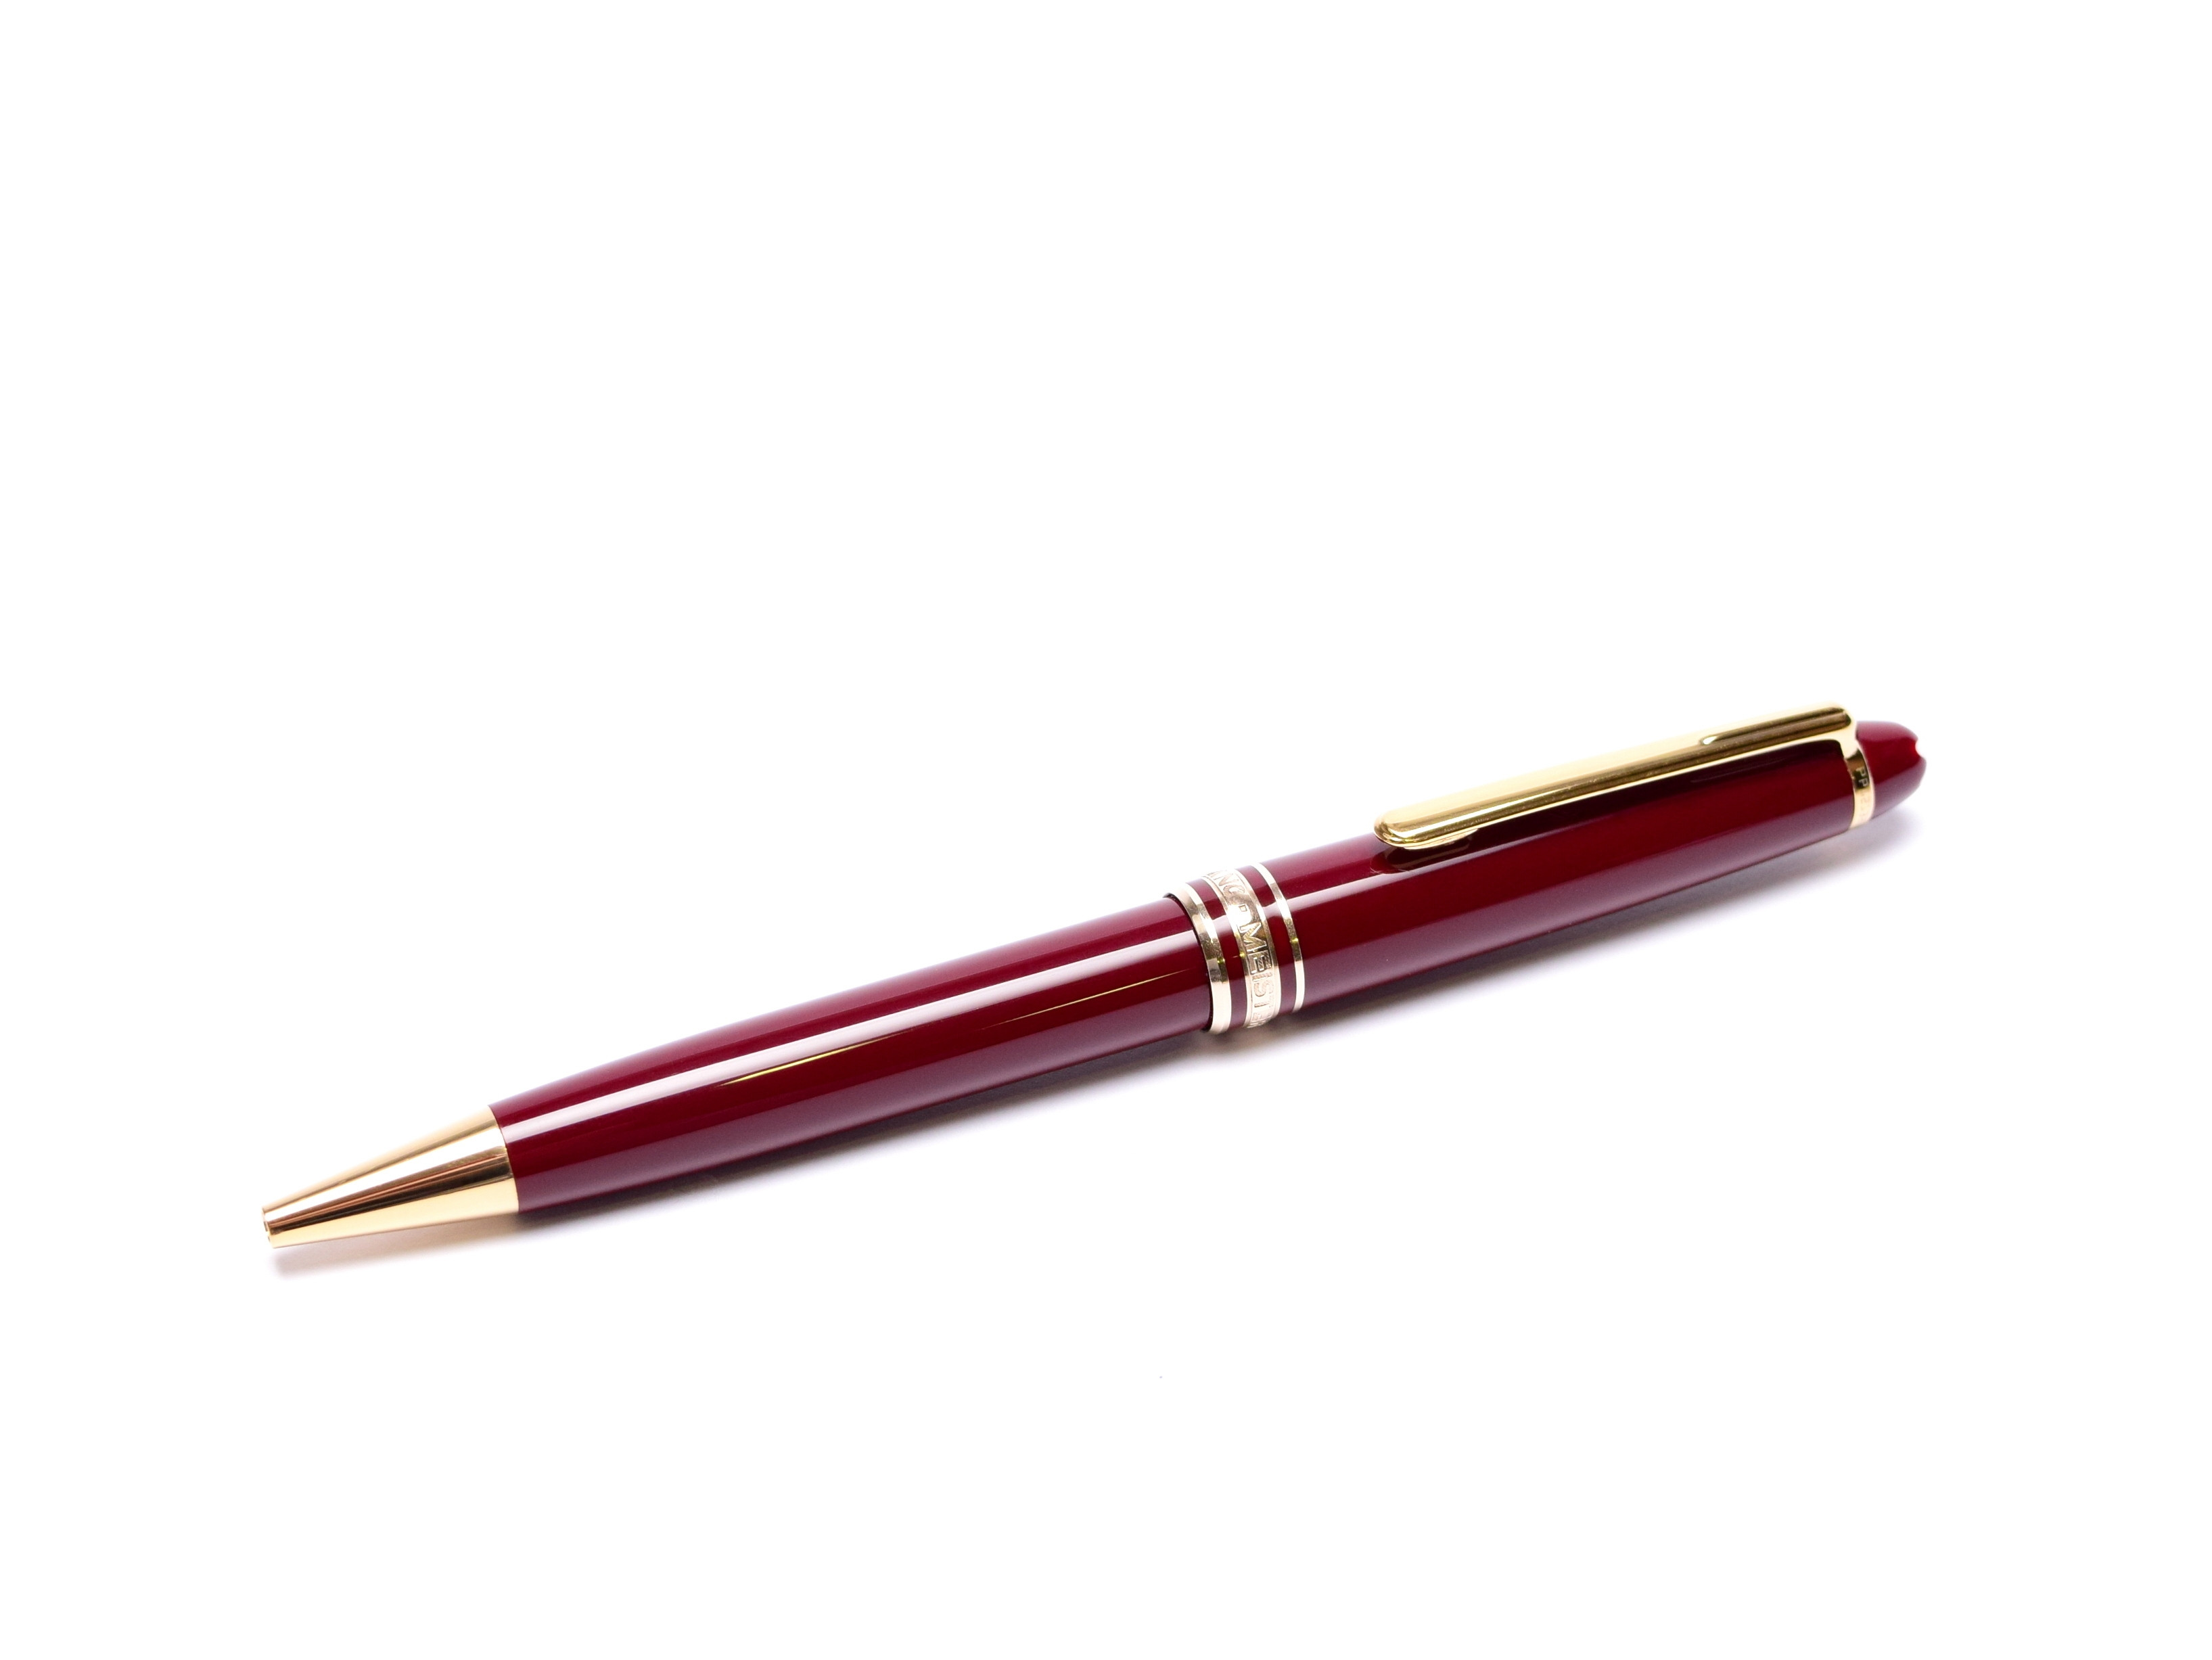 MB Meisterstuck Dark Red high quality Rollerball pen classic design no pen box